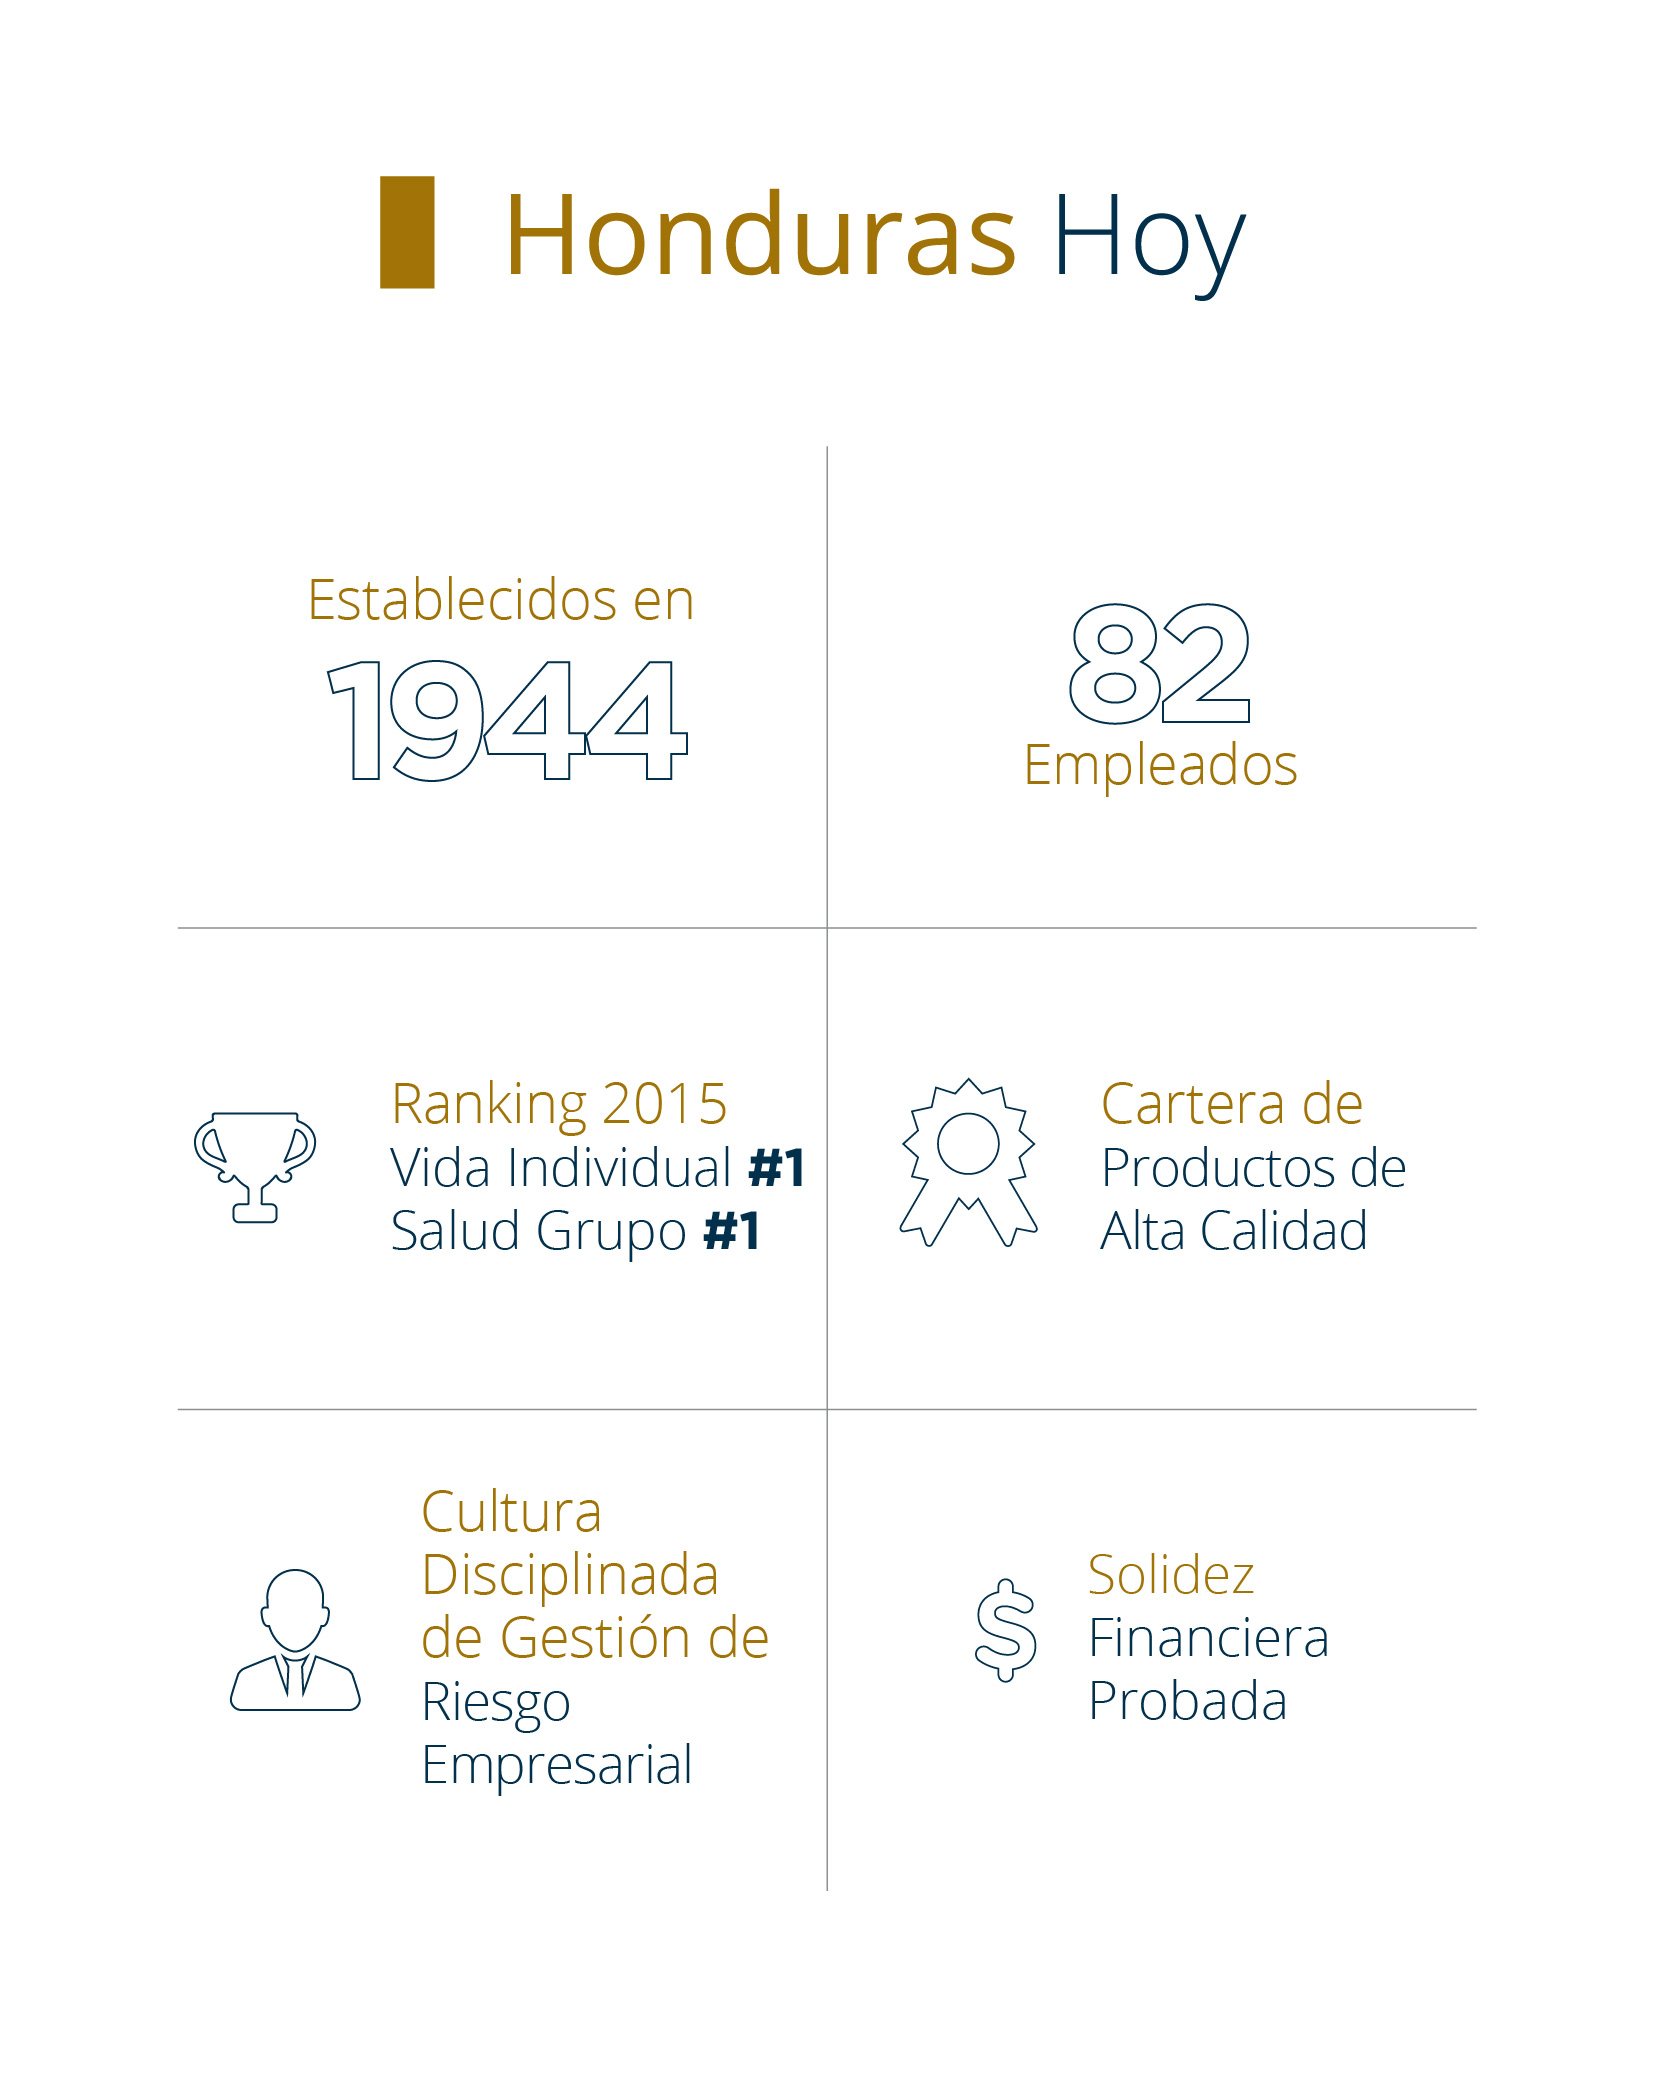 Sobre Pan-American Life Insurance Group de Honduras